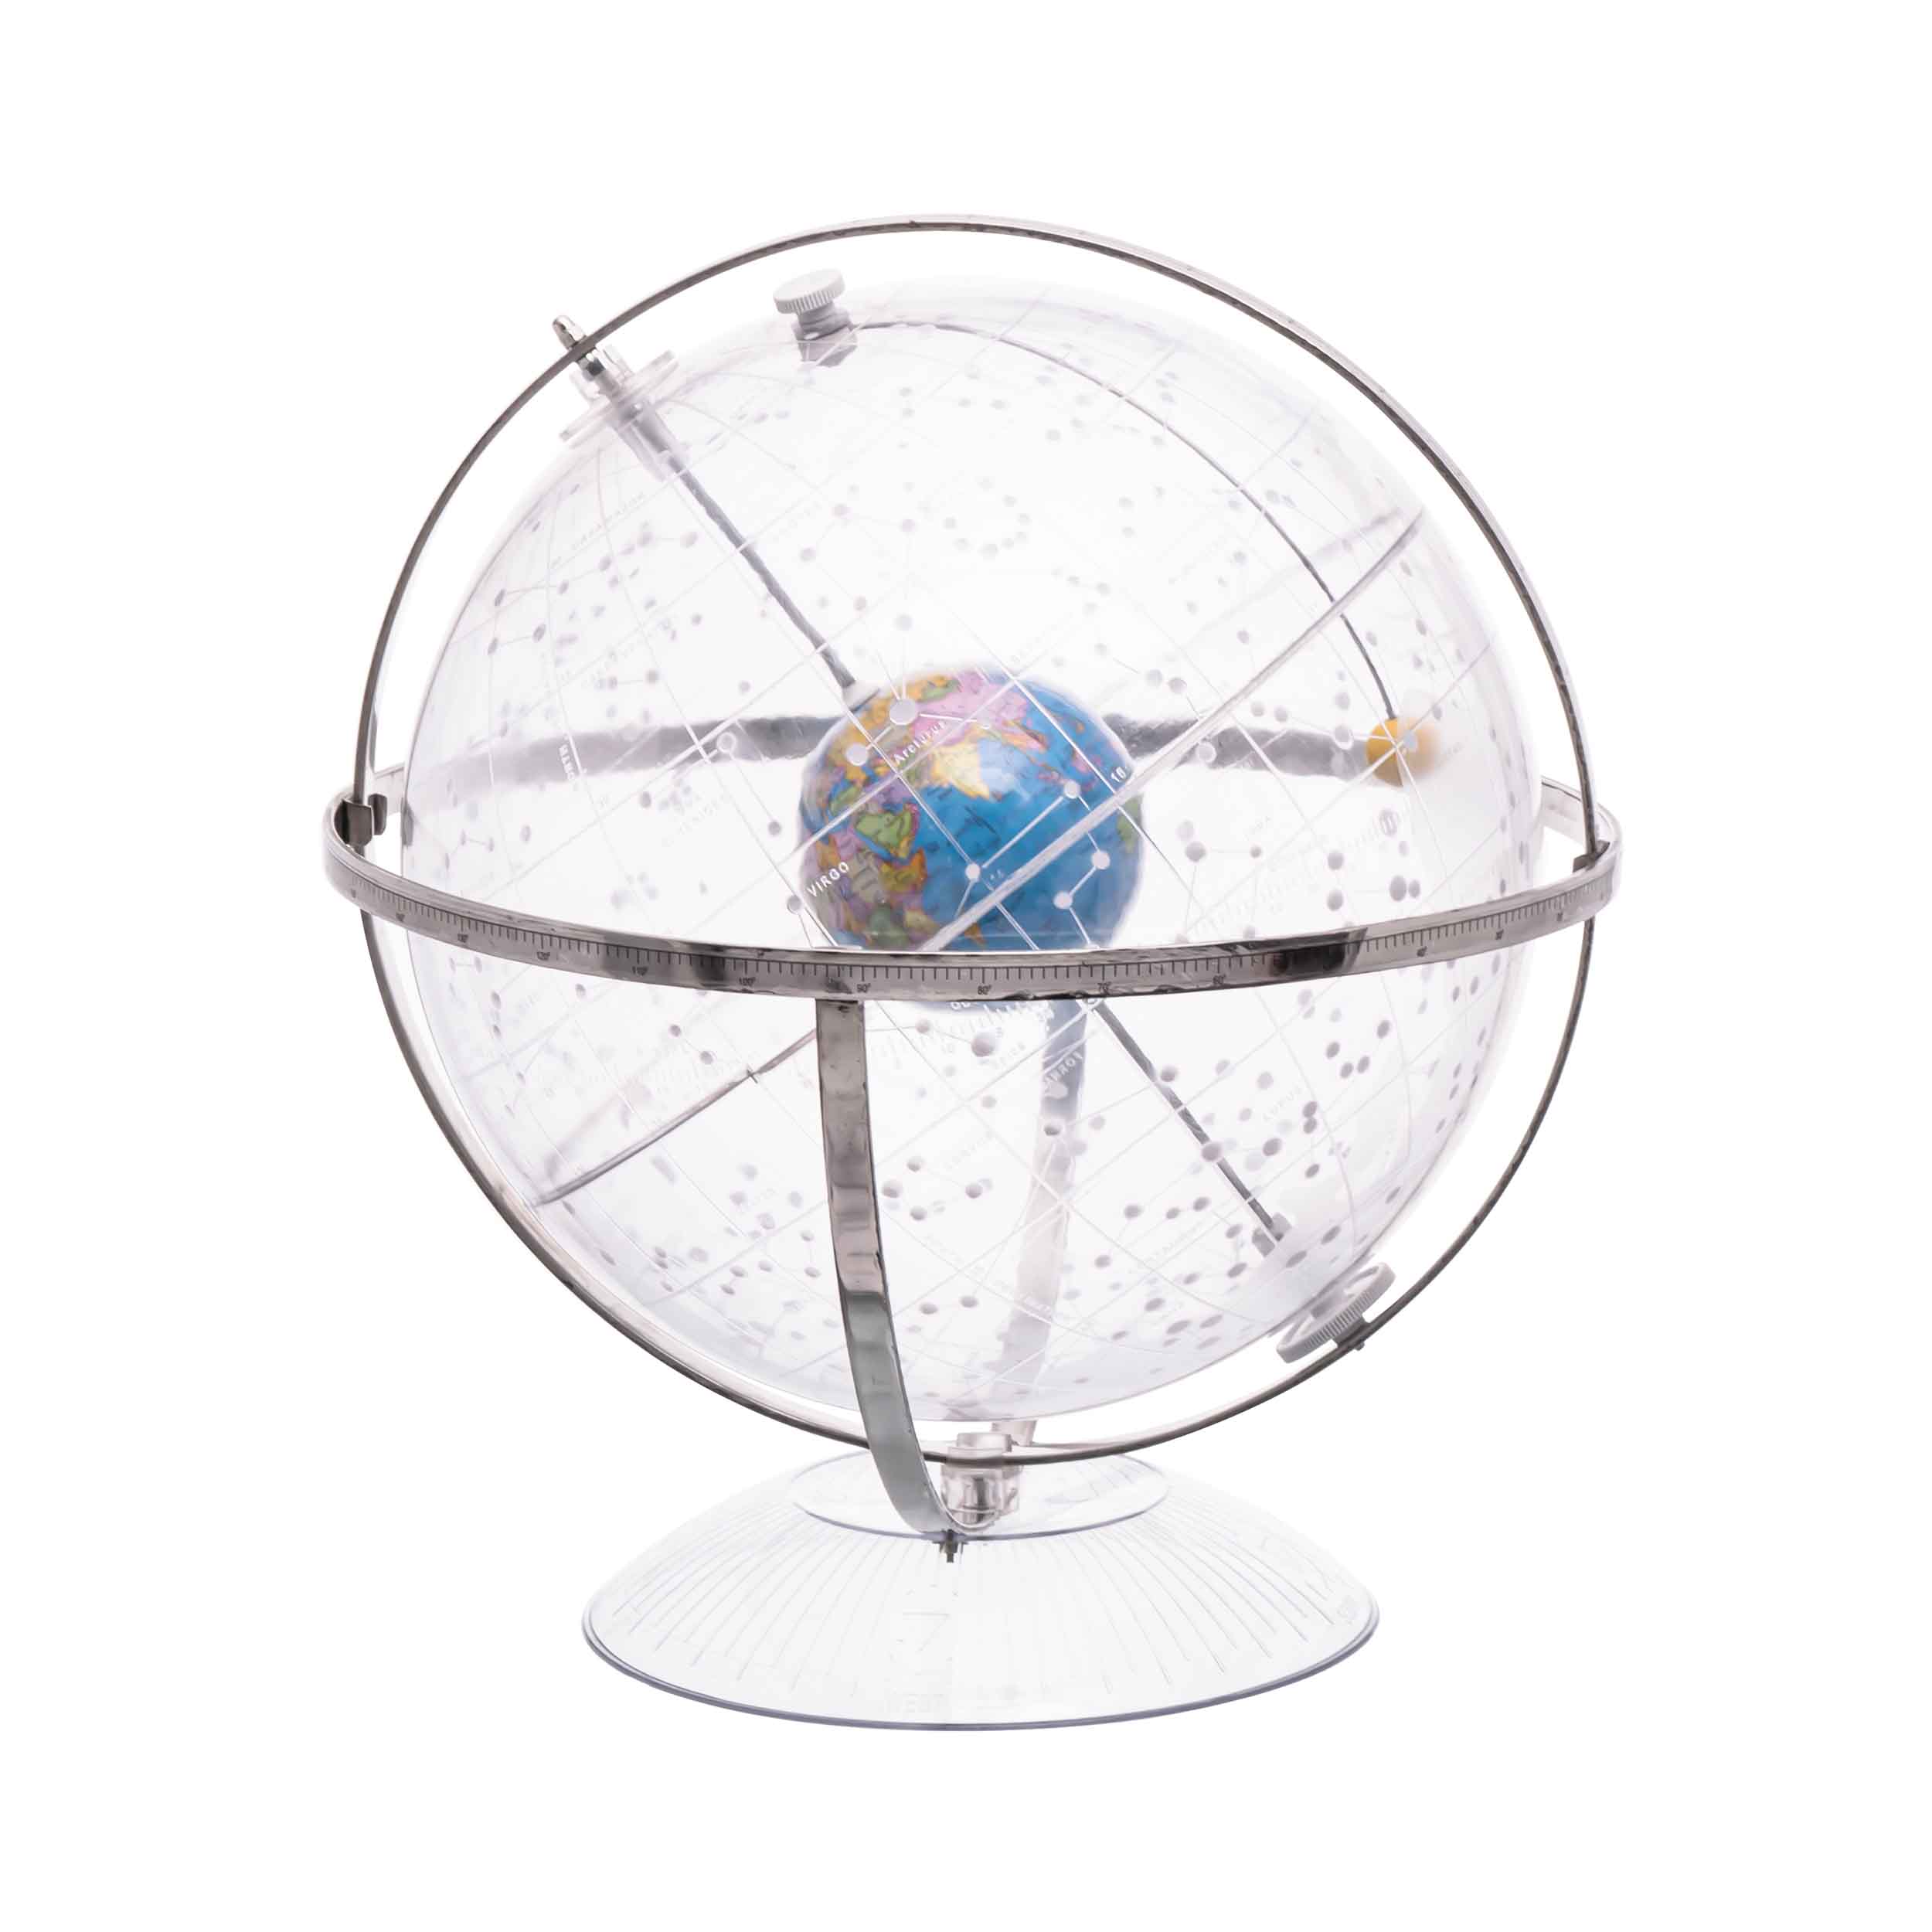 Transparent Celestial Star Globe | KLM Bio Scientific # #